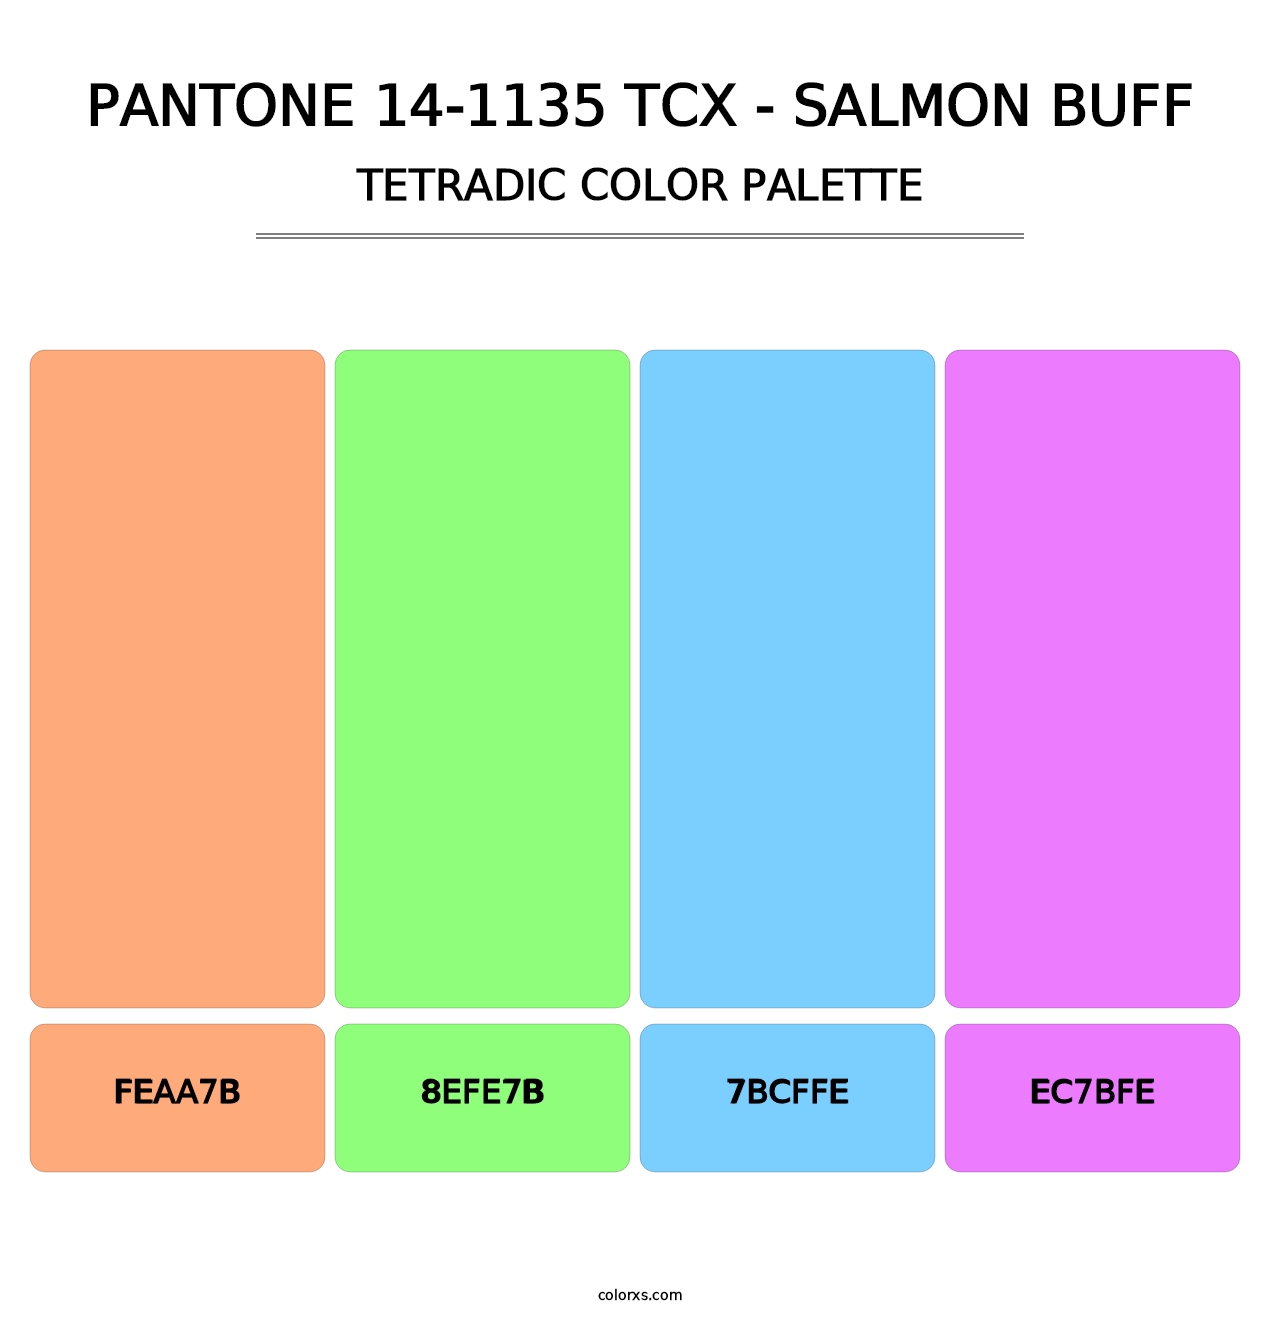 PANTONE 14-1135 TCX - Salmon Buff - Tetradic Color Palette